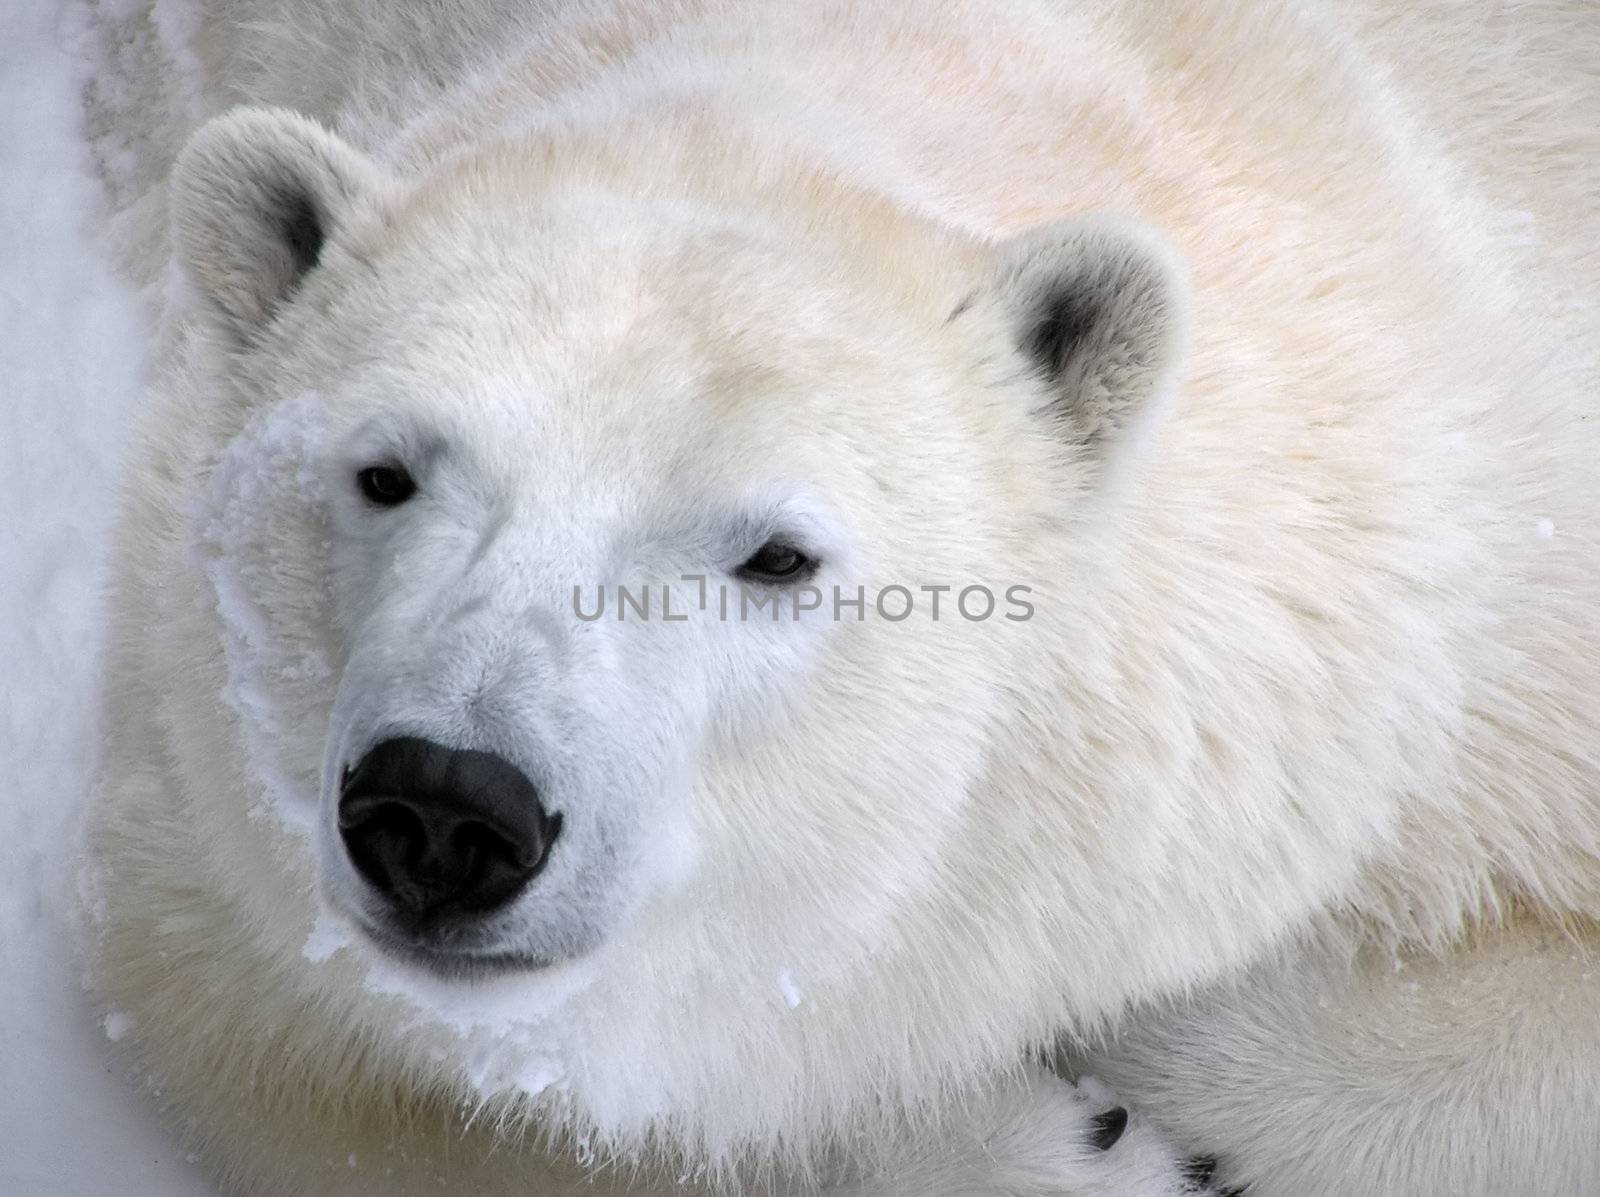 Polar bear ready for a nap portrait by Mirage3